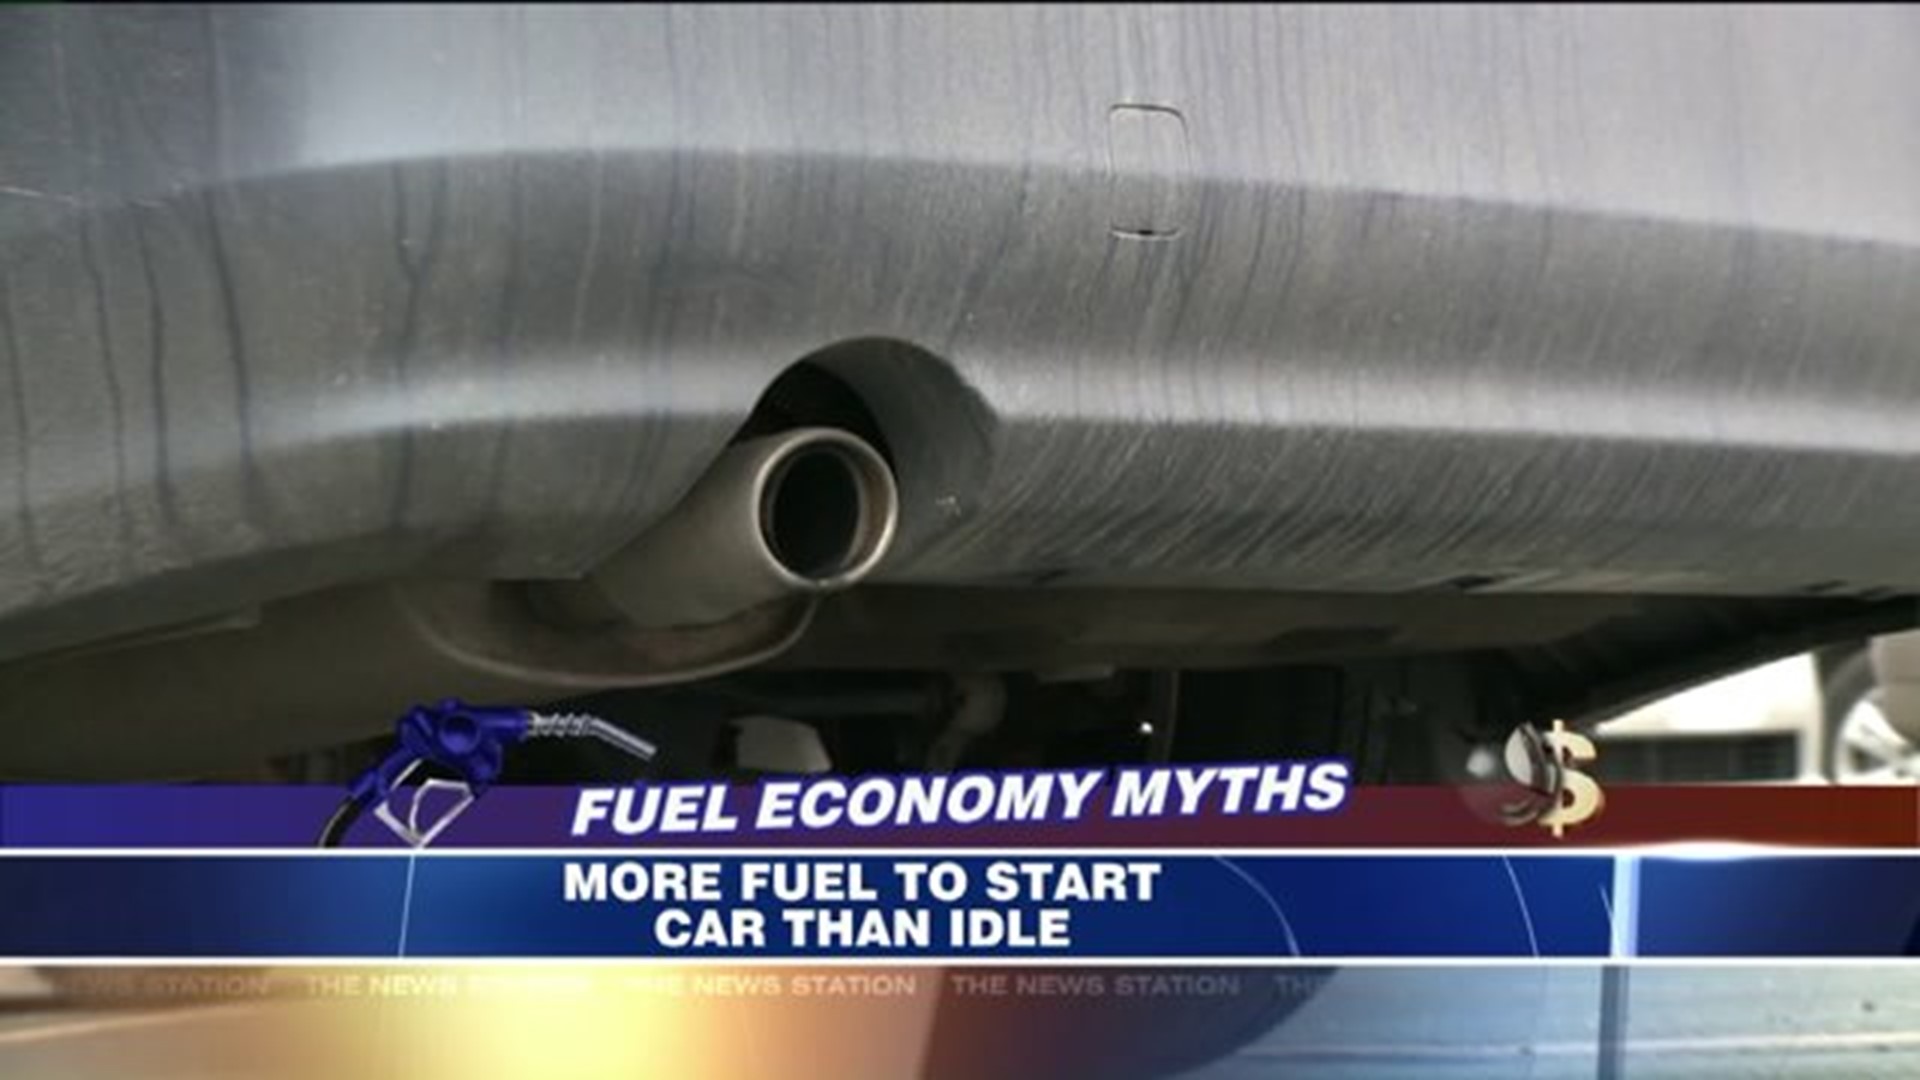 Debunking Fuel Economy Myths 4 through 6